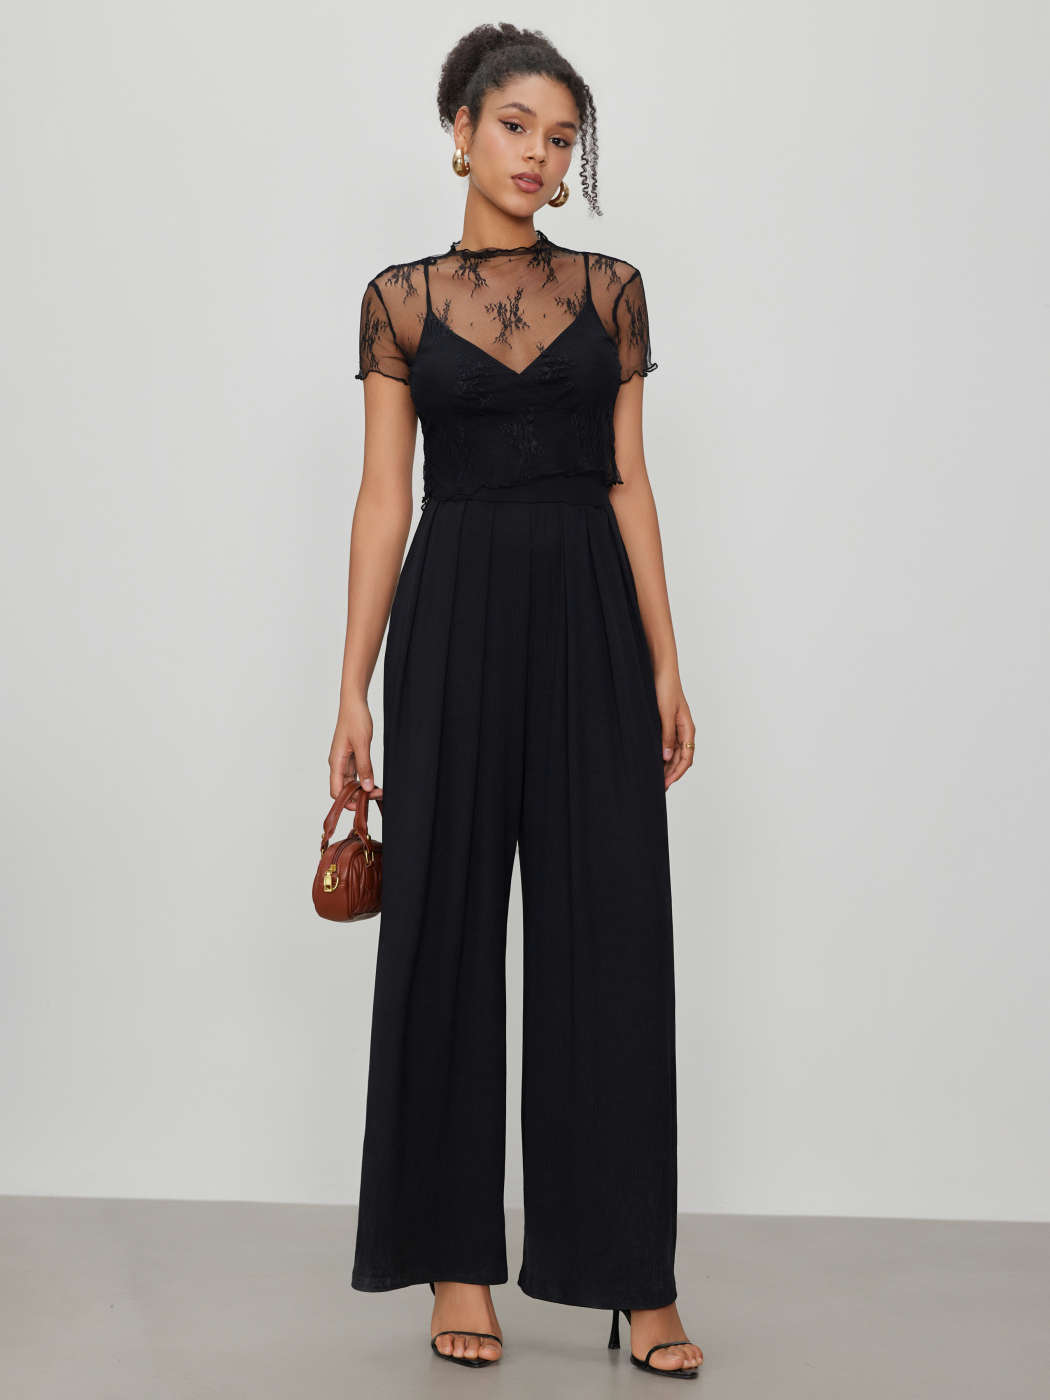 Buy 831 - Plus Size V Neck Lace Top Palazzo Wide Pants Jumpsuit Black (3X)  at